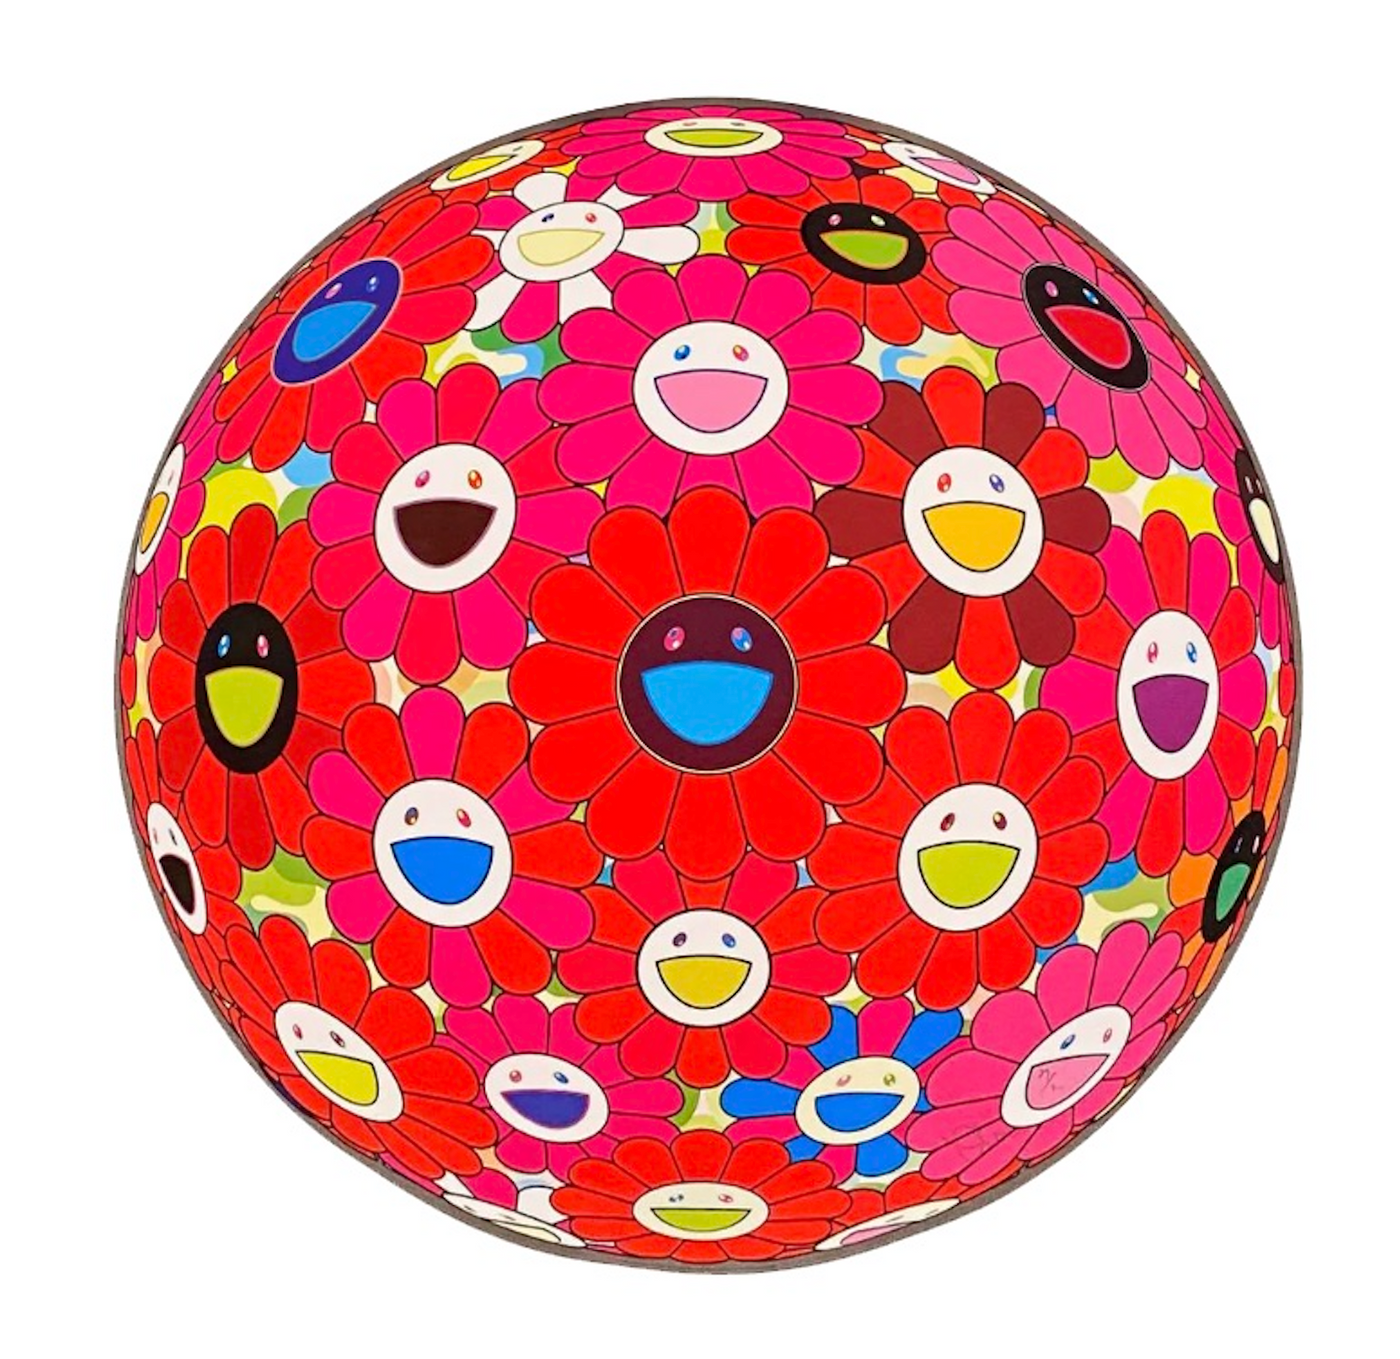 Takashi Murakami, 'Flowerball (3D) - Red, Pink, Blue', 2013